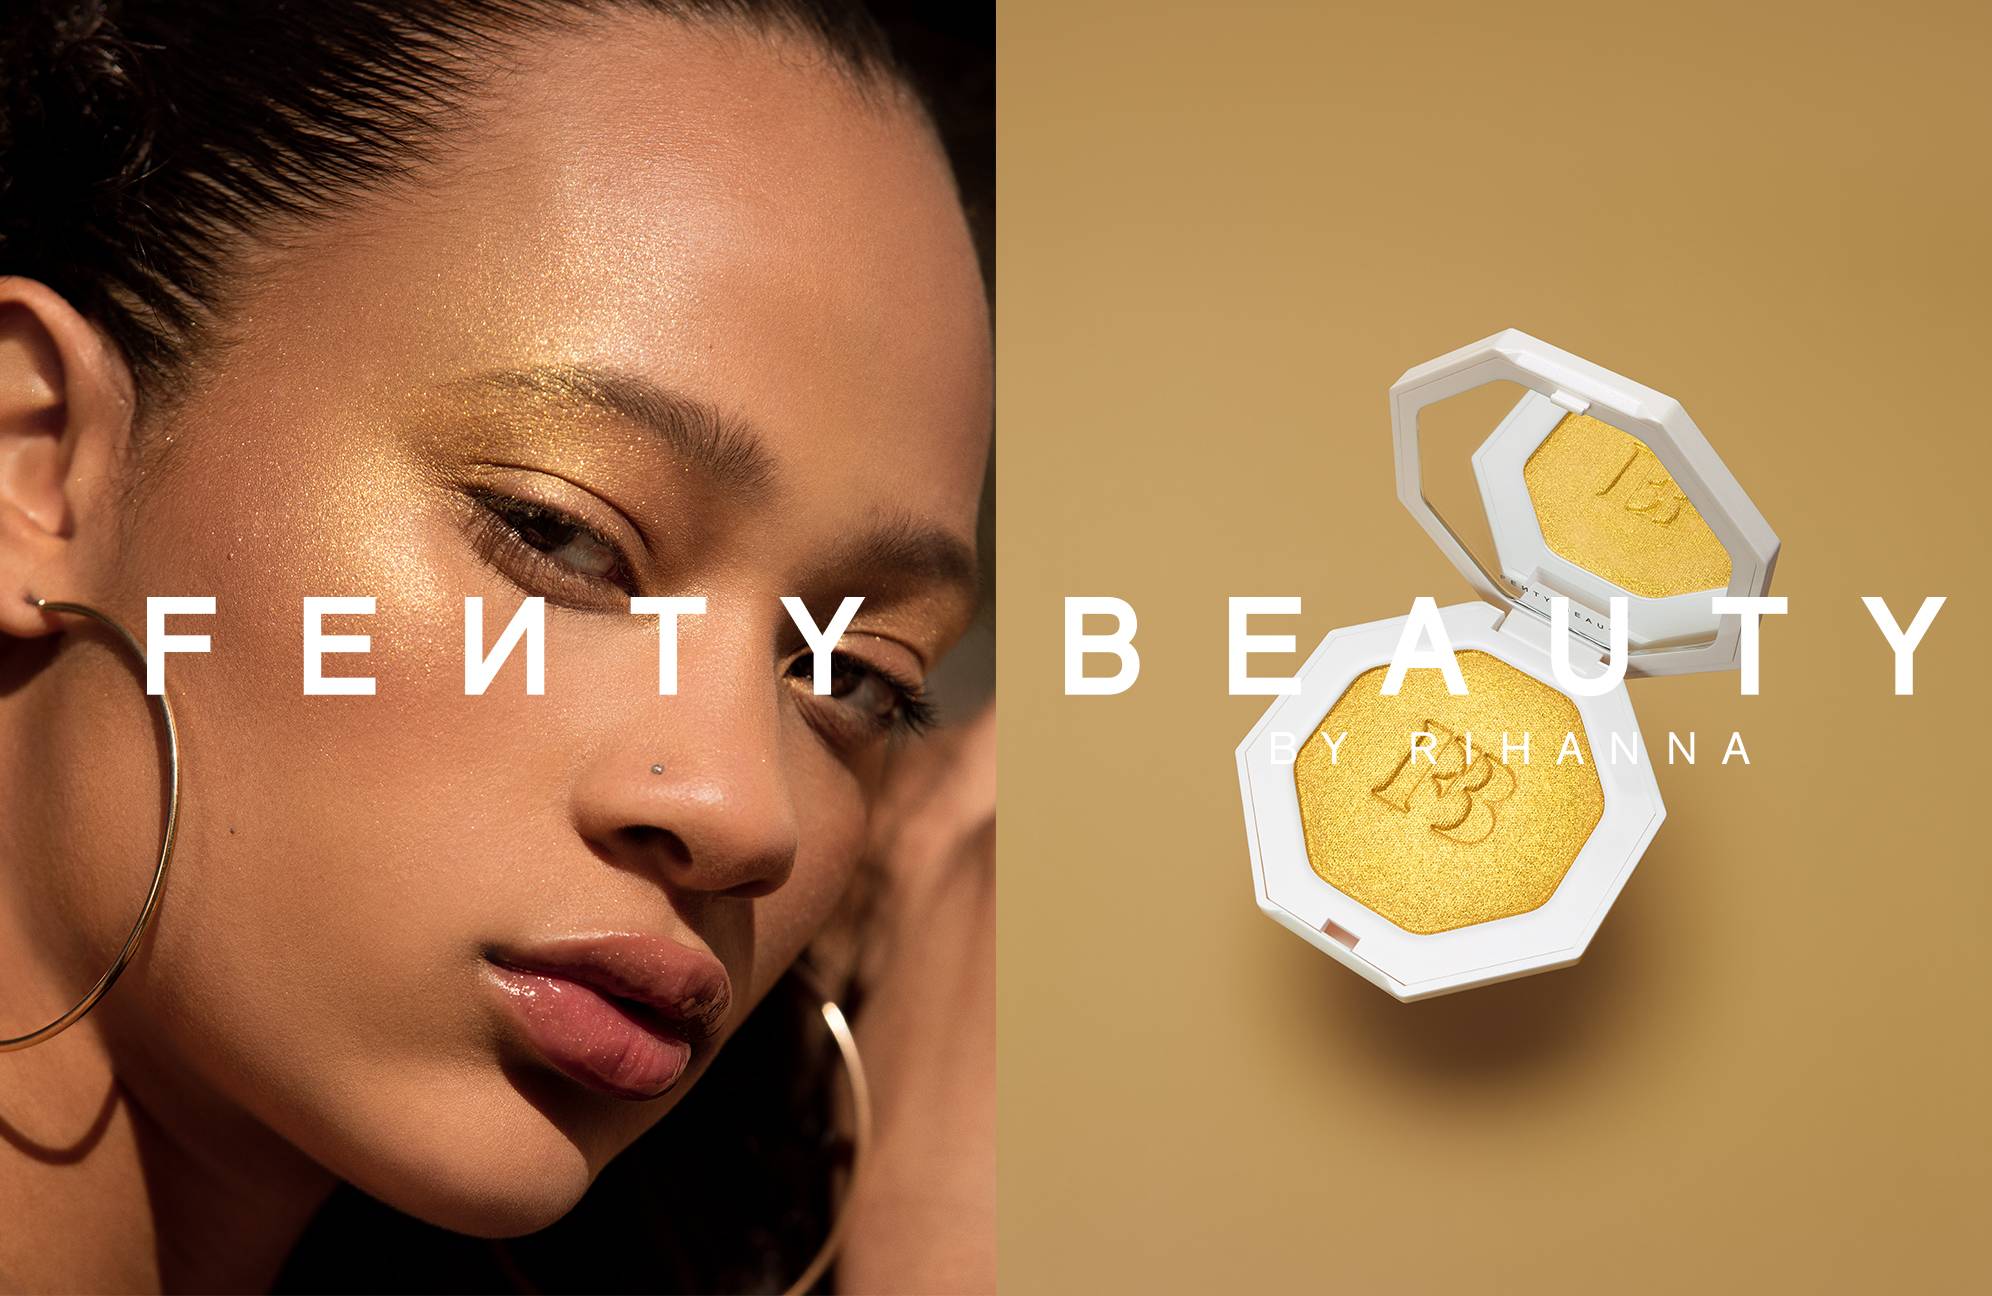 What makeup brand do you prefer? | Fenty Beauty